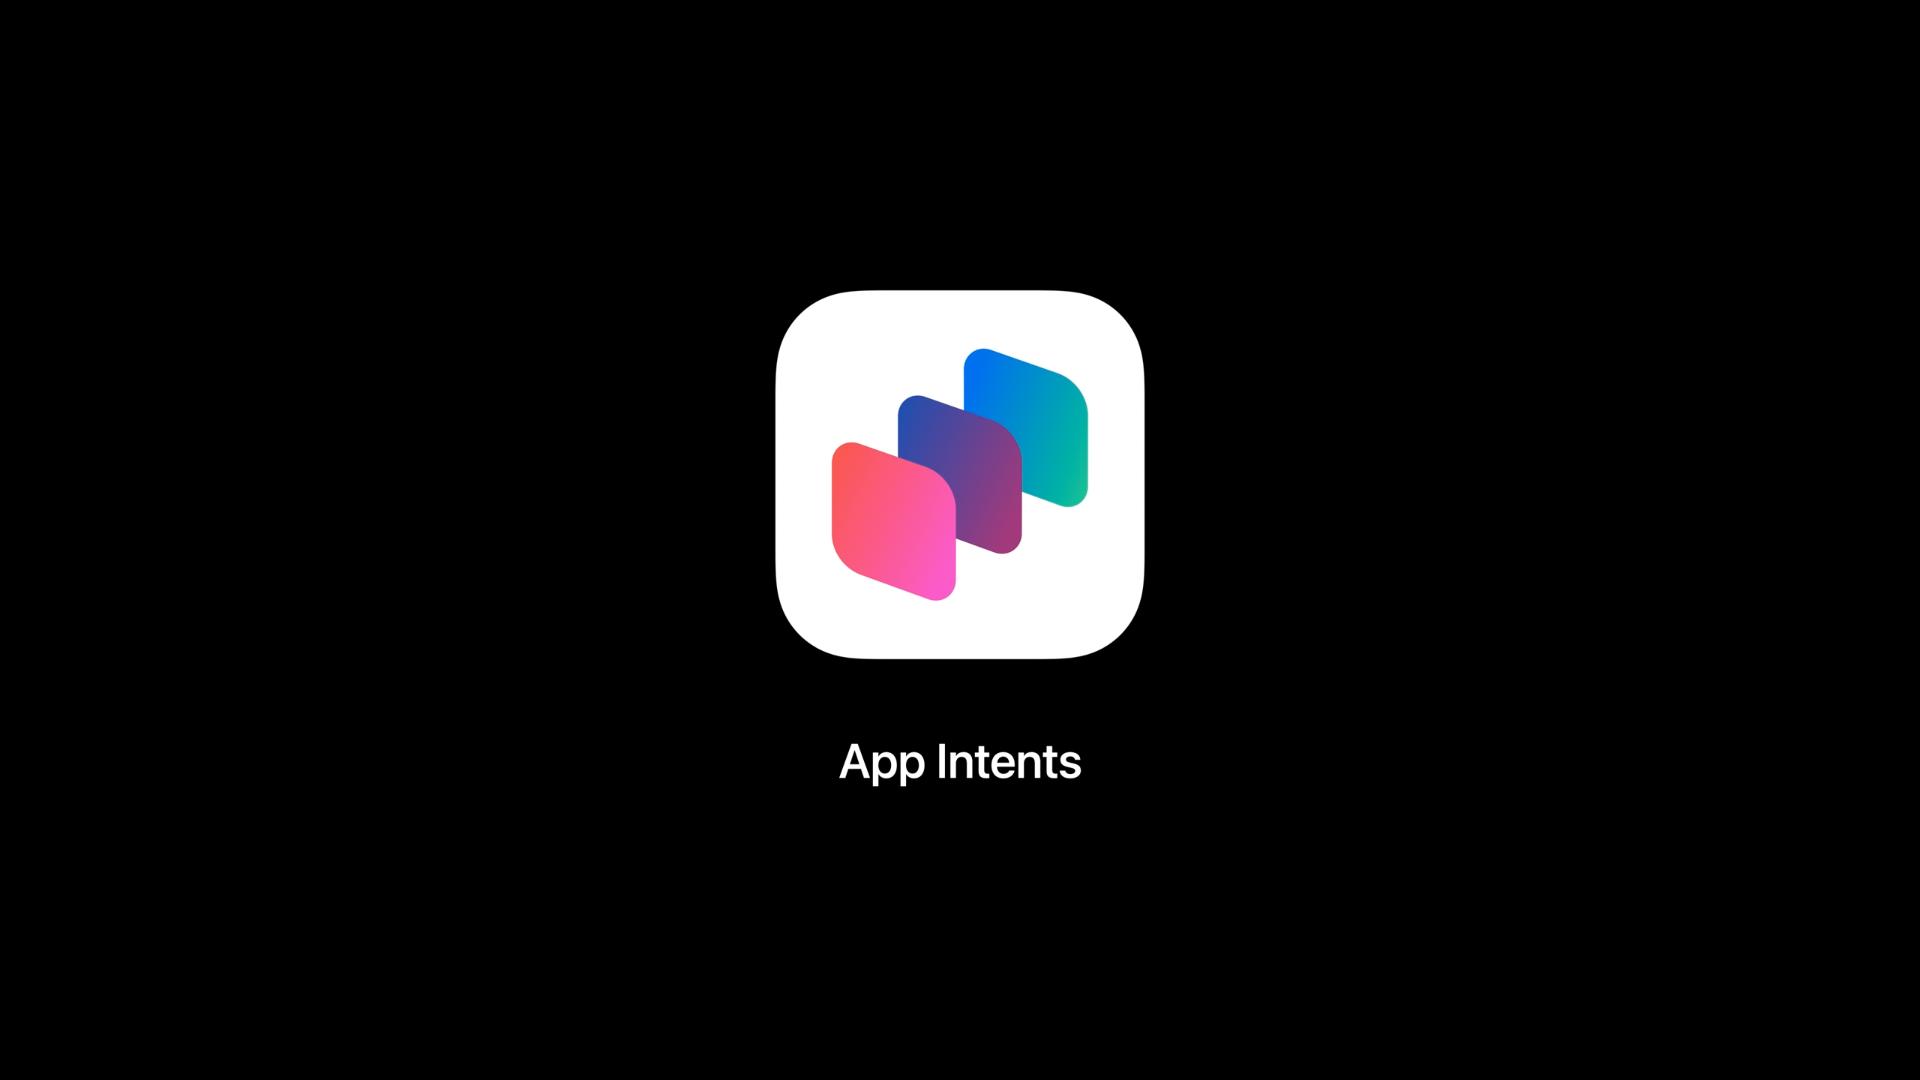 Apple screenshot "Dive into app intent" developer session showing App Intents logo on screen.